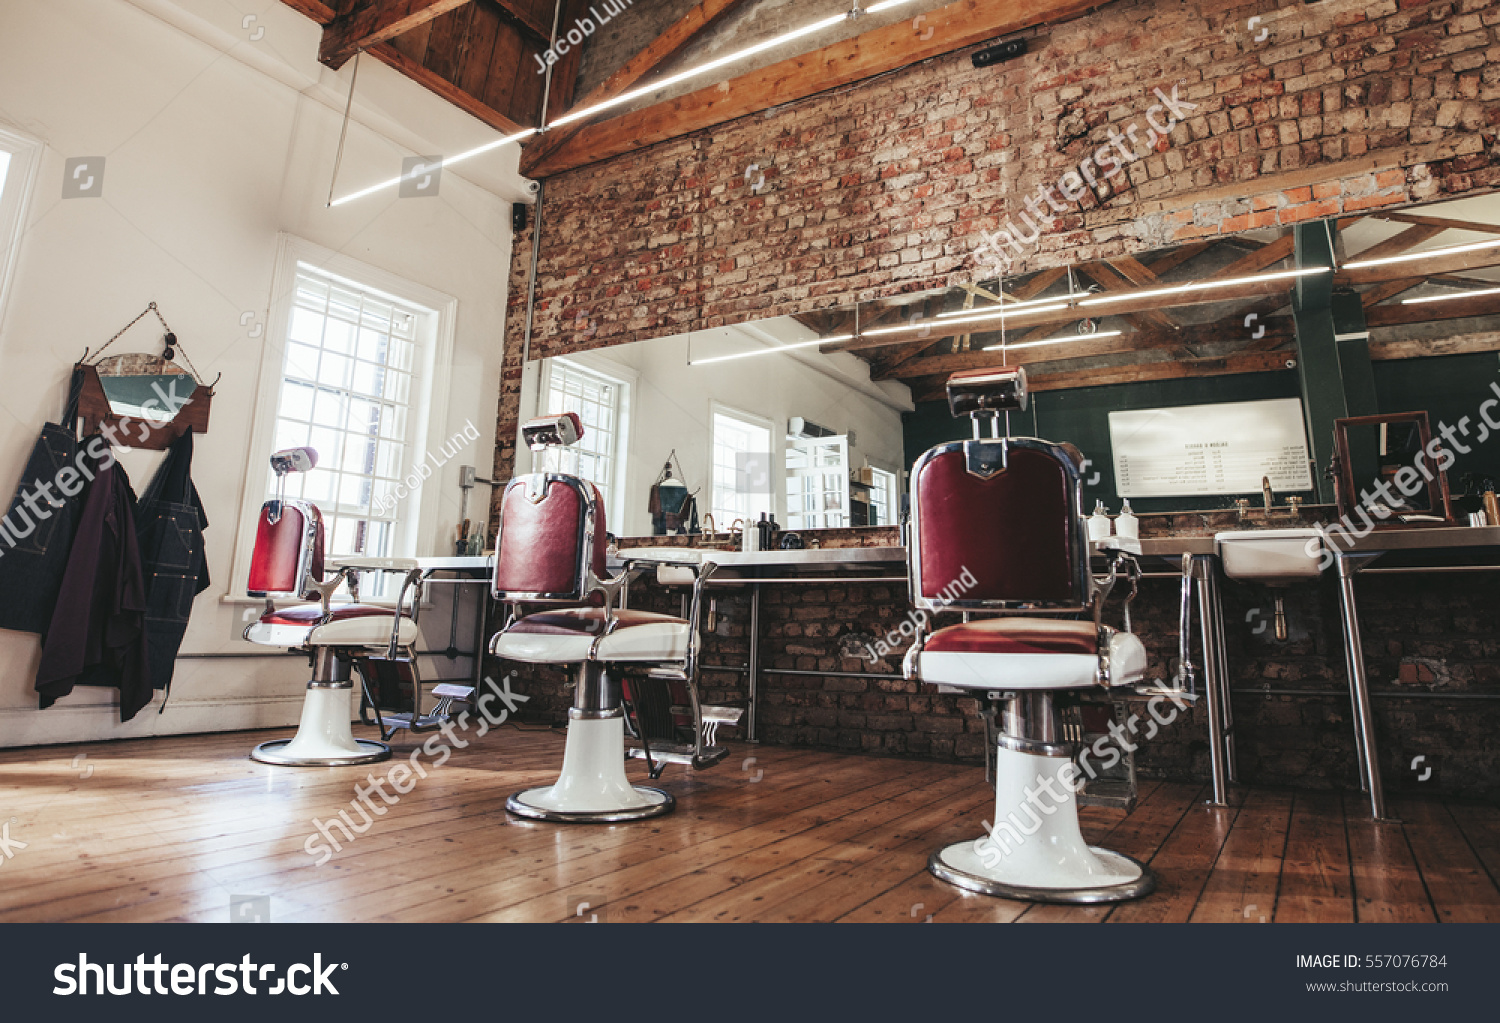 2,532 Inside barber shop Images, Stock Photos & Vectors | Shutterstock